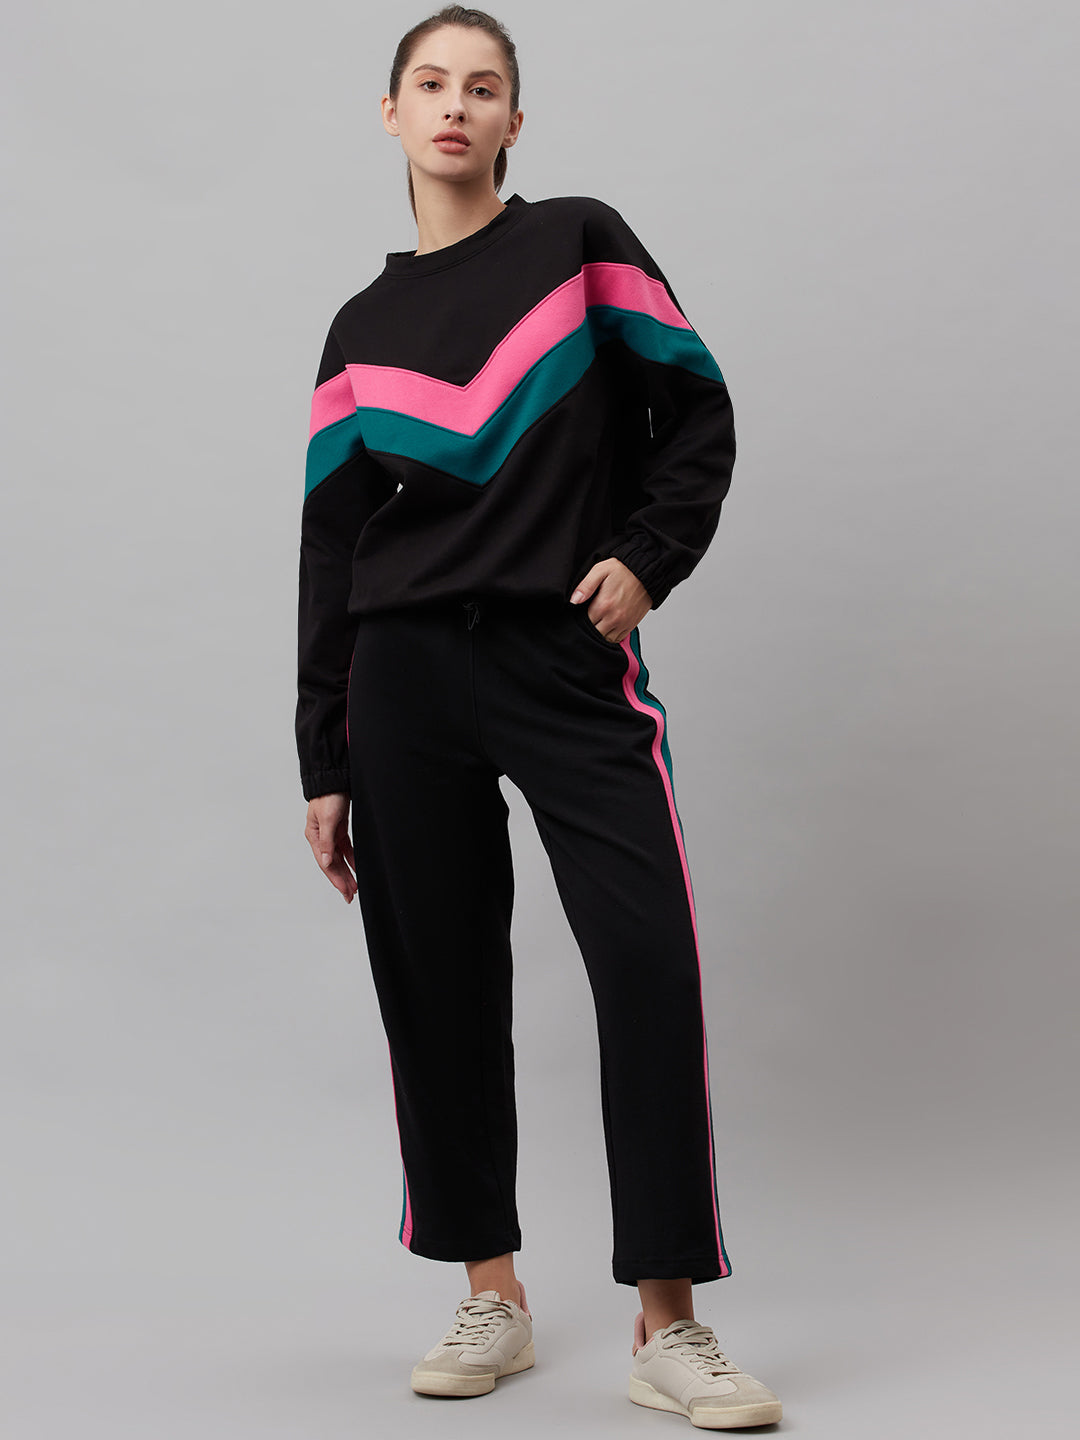 Laabha Women Black Pink Colourblocked Stylish Tracksuit – Laabha Athleisure